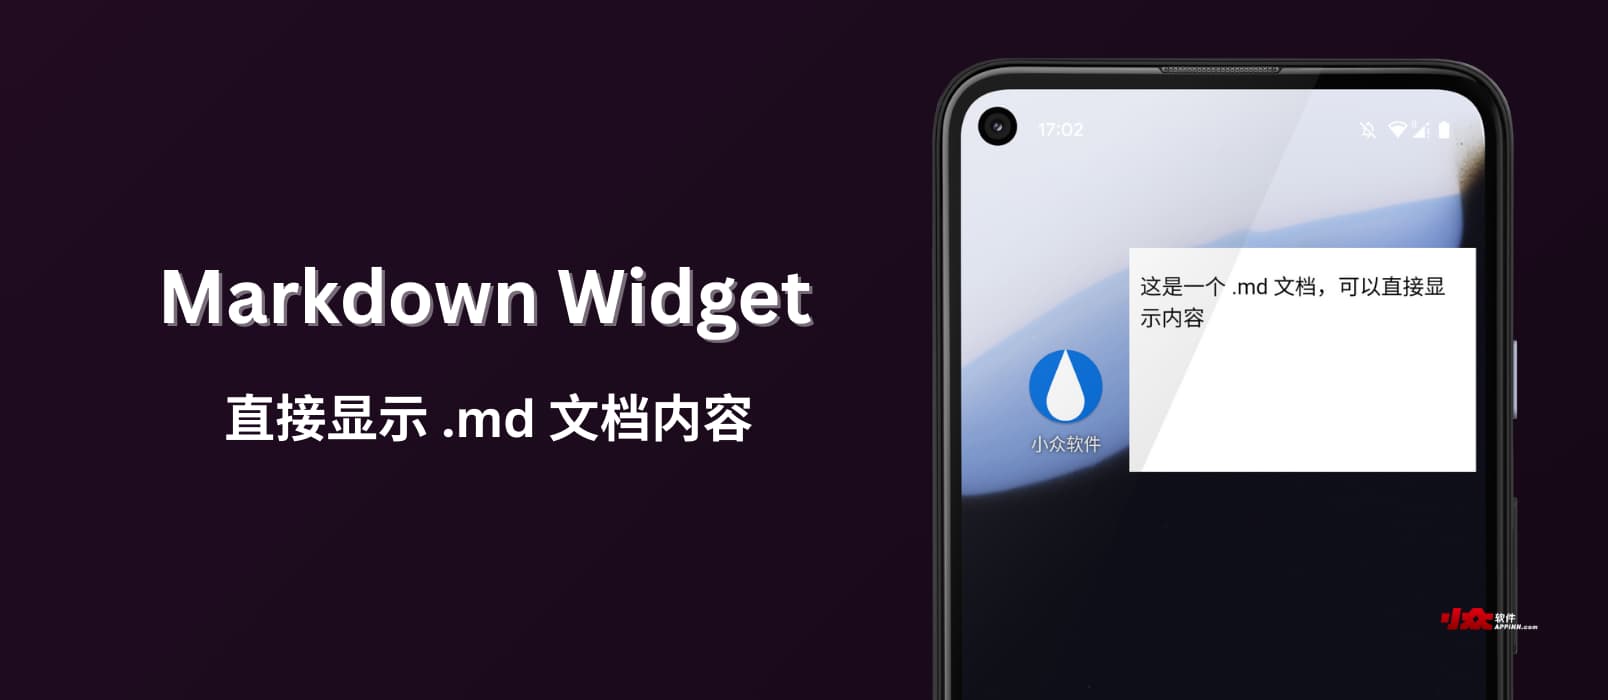 Markdown Widget - 在 Android 屏幕上直接显示 Markdown 文档内容 1